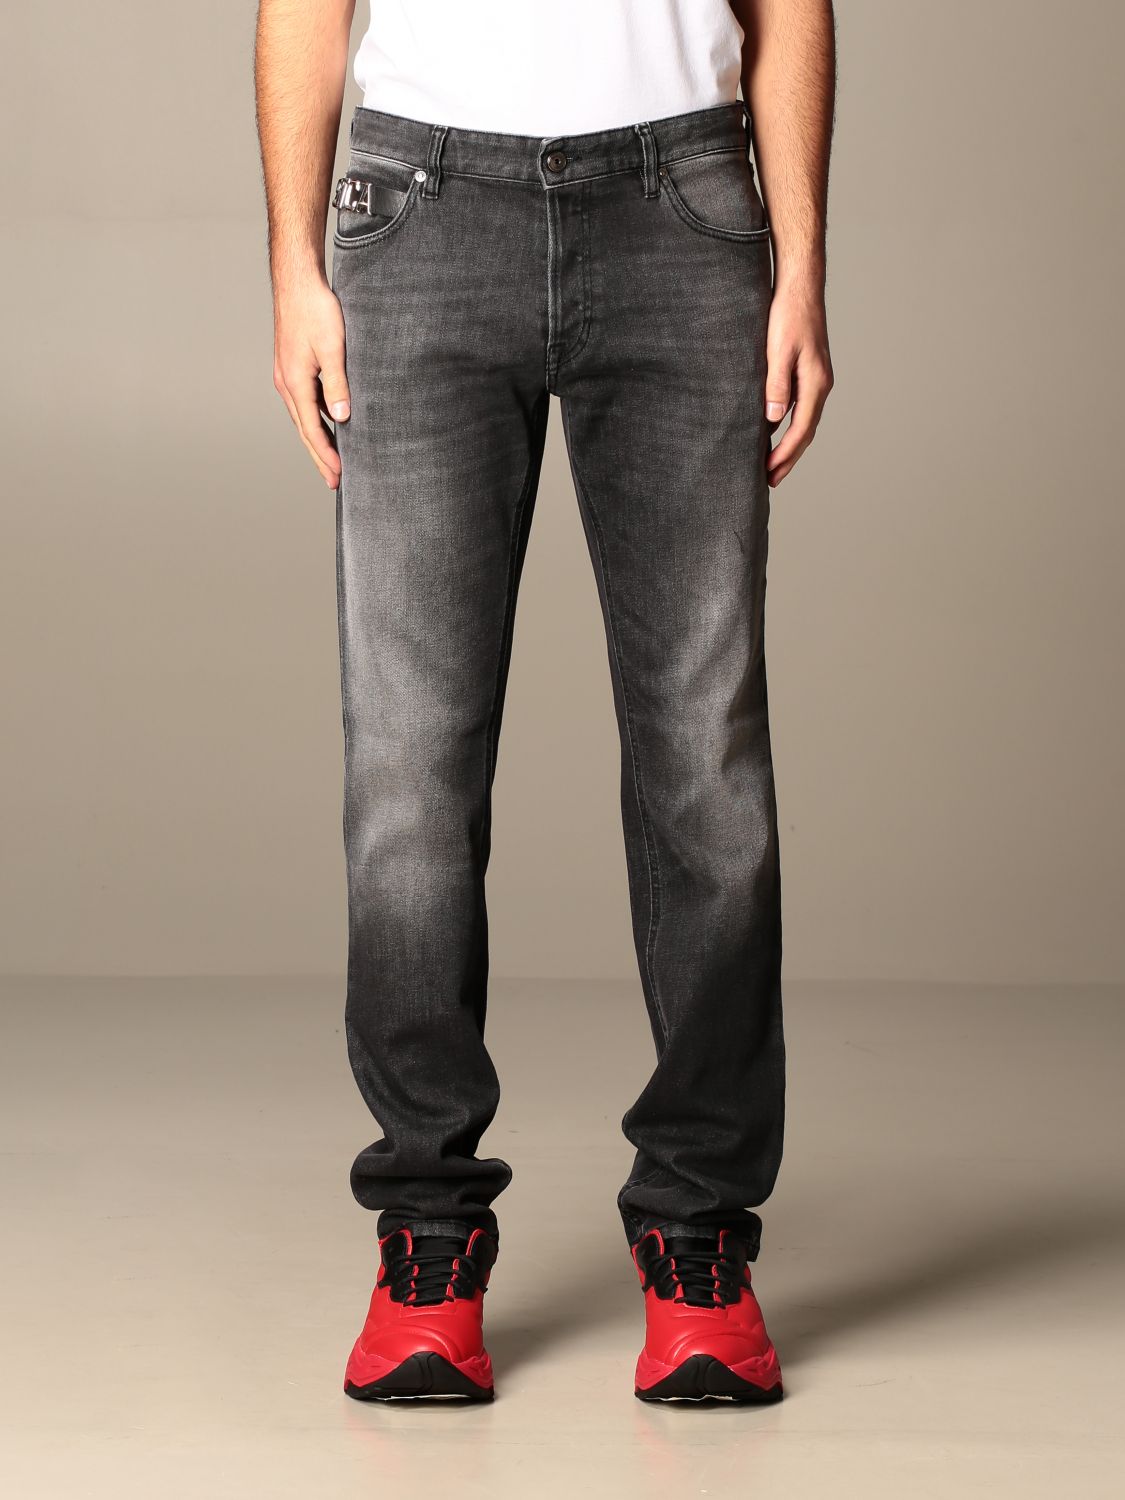 Ontmoedigen Verscheidenheid geur Just Cavalli Outlet: jeans in used denim - Black | Just Cavalli jeans  S01LA0124 N31810 online on GIGLIO.COM